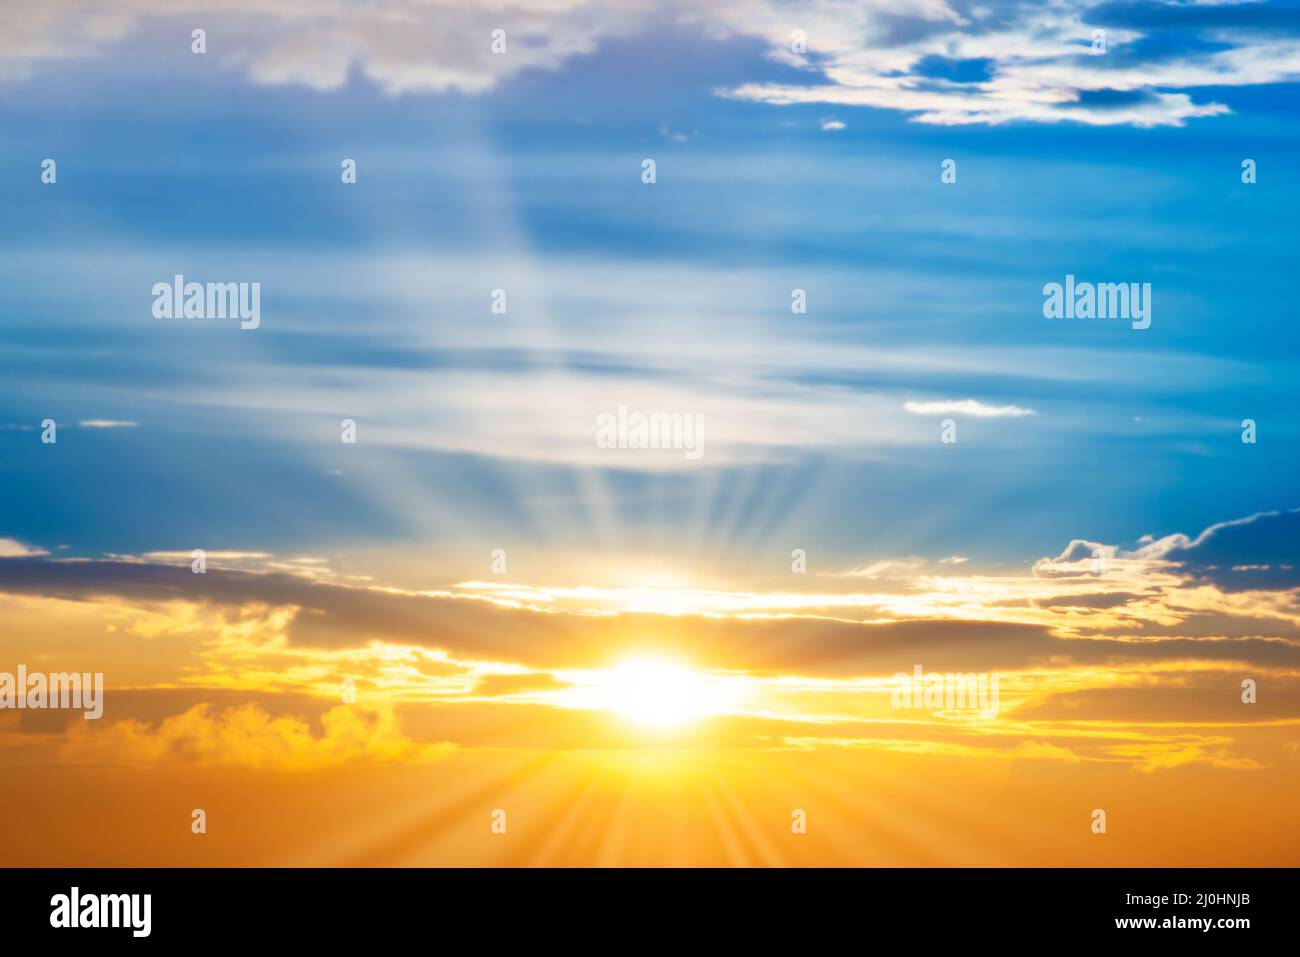 Sunset sky with sun rays Stock Photo